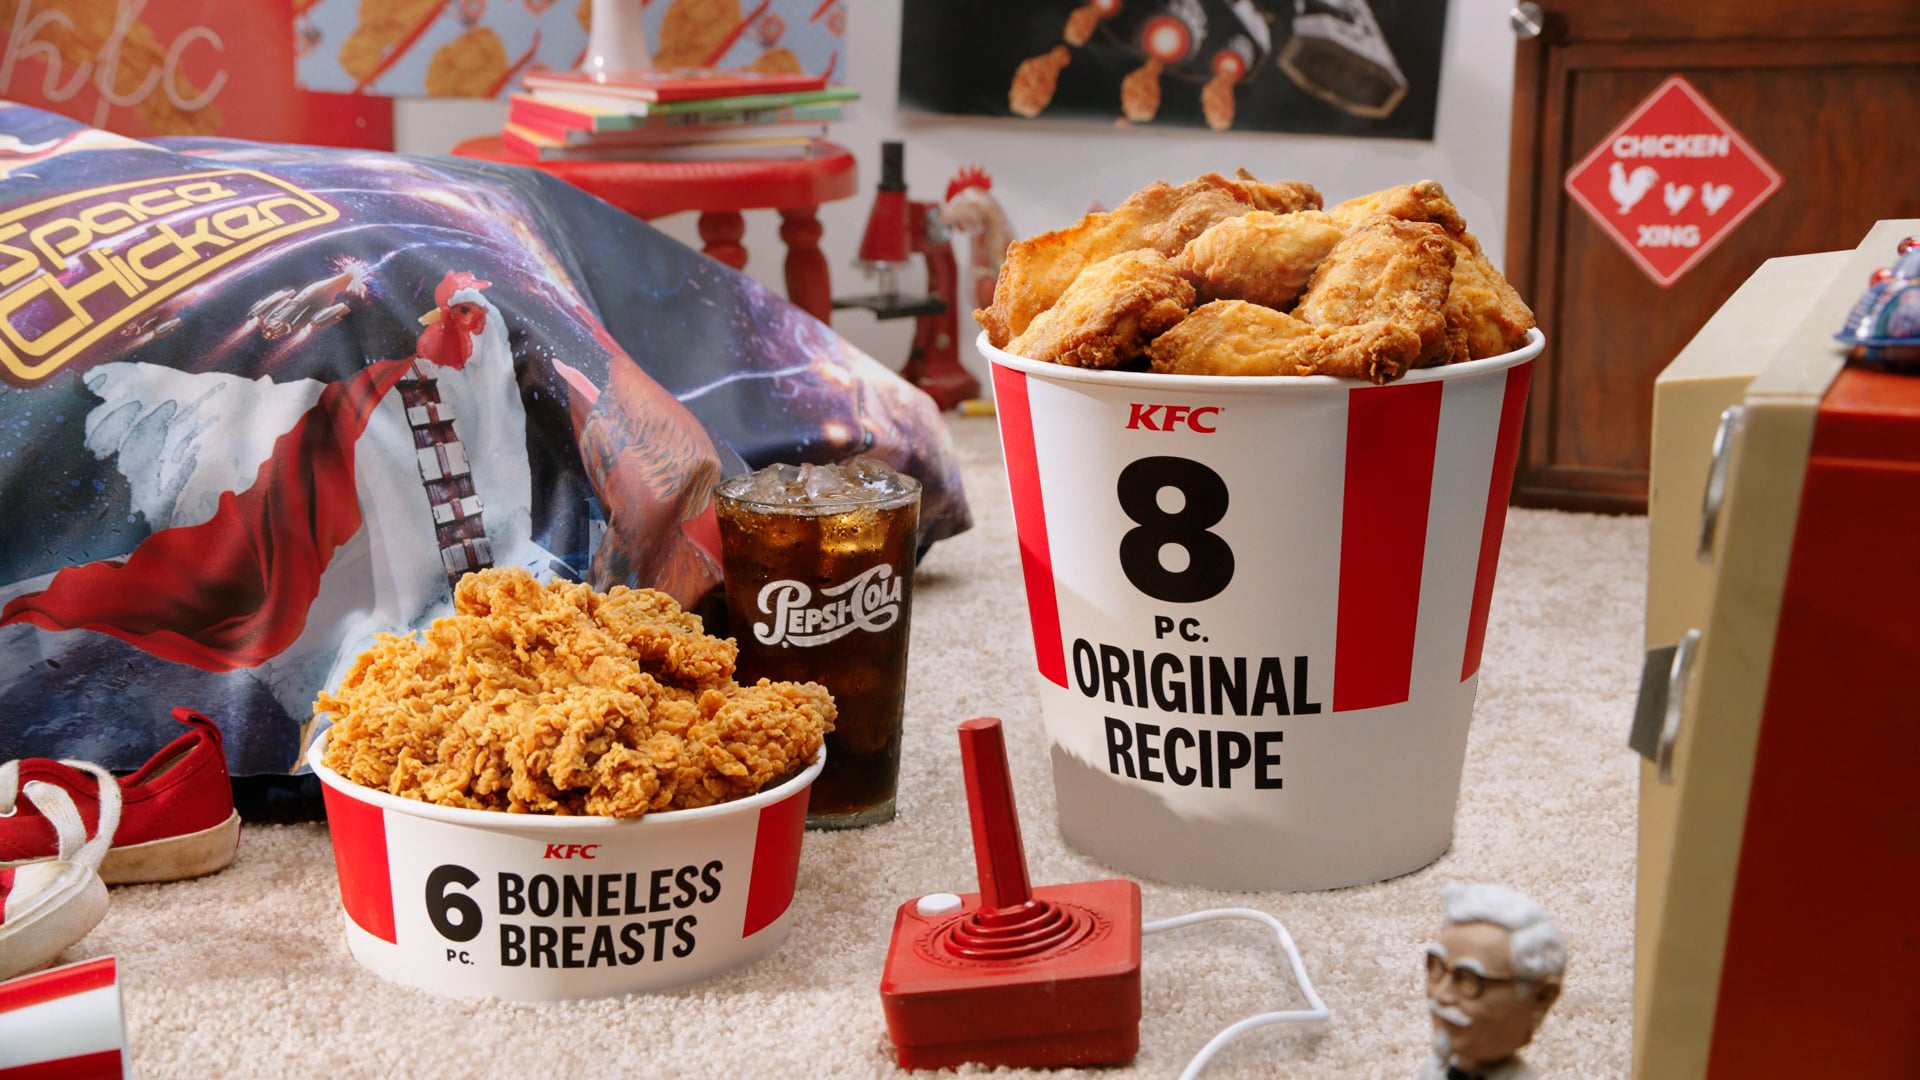 KFC "One Roof"